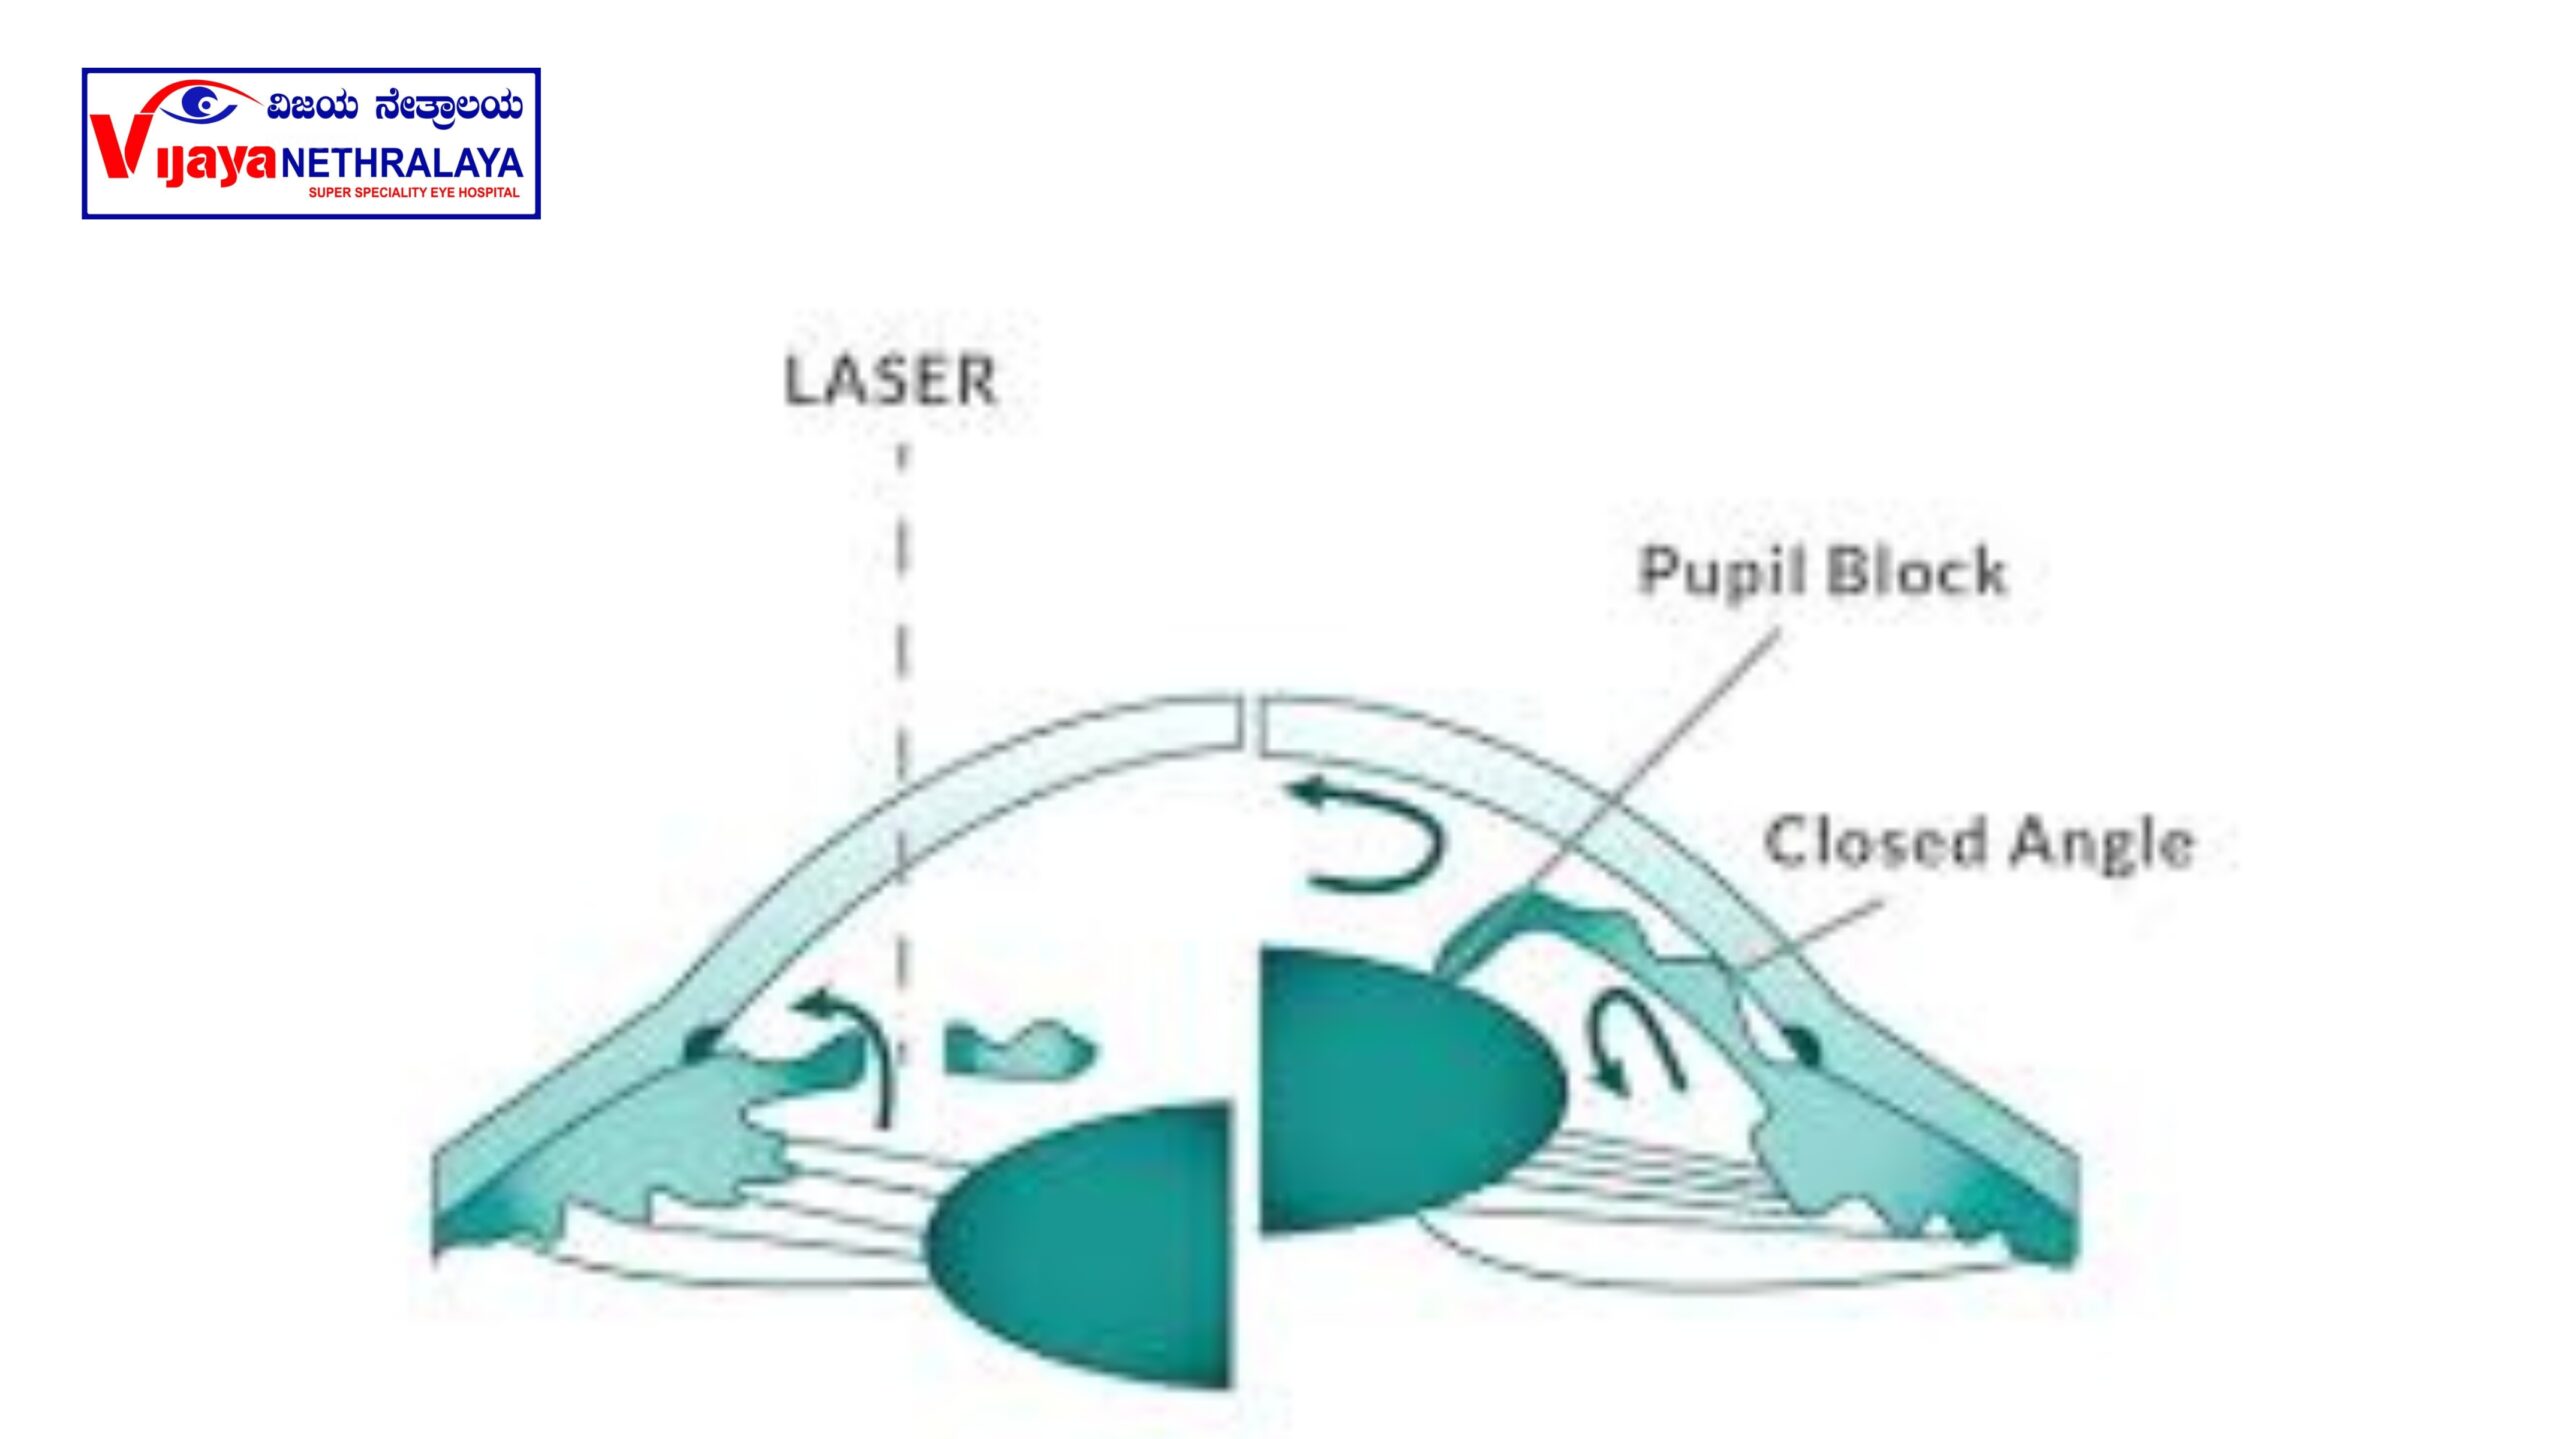 Laser Peripheral Iridotomy